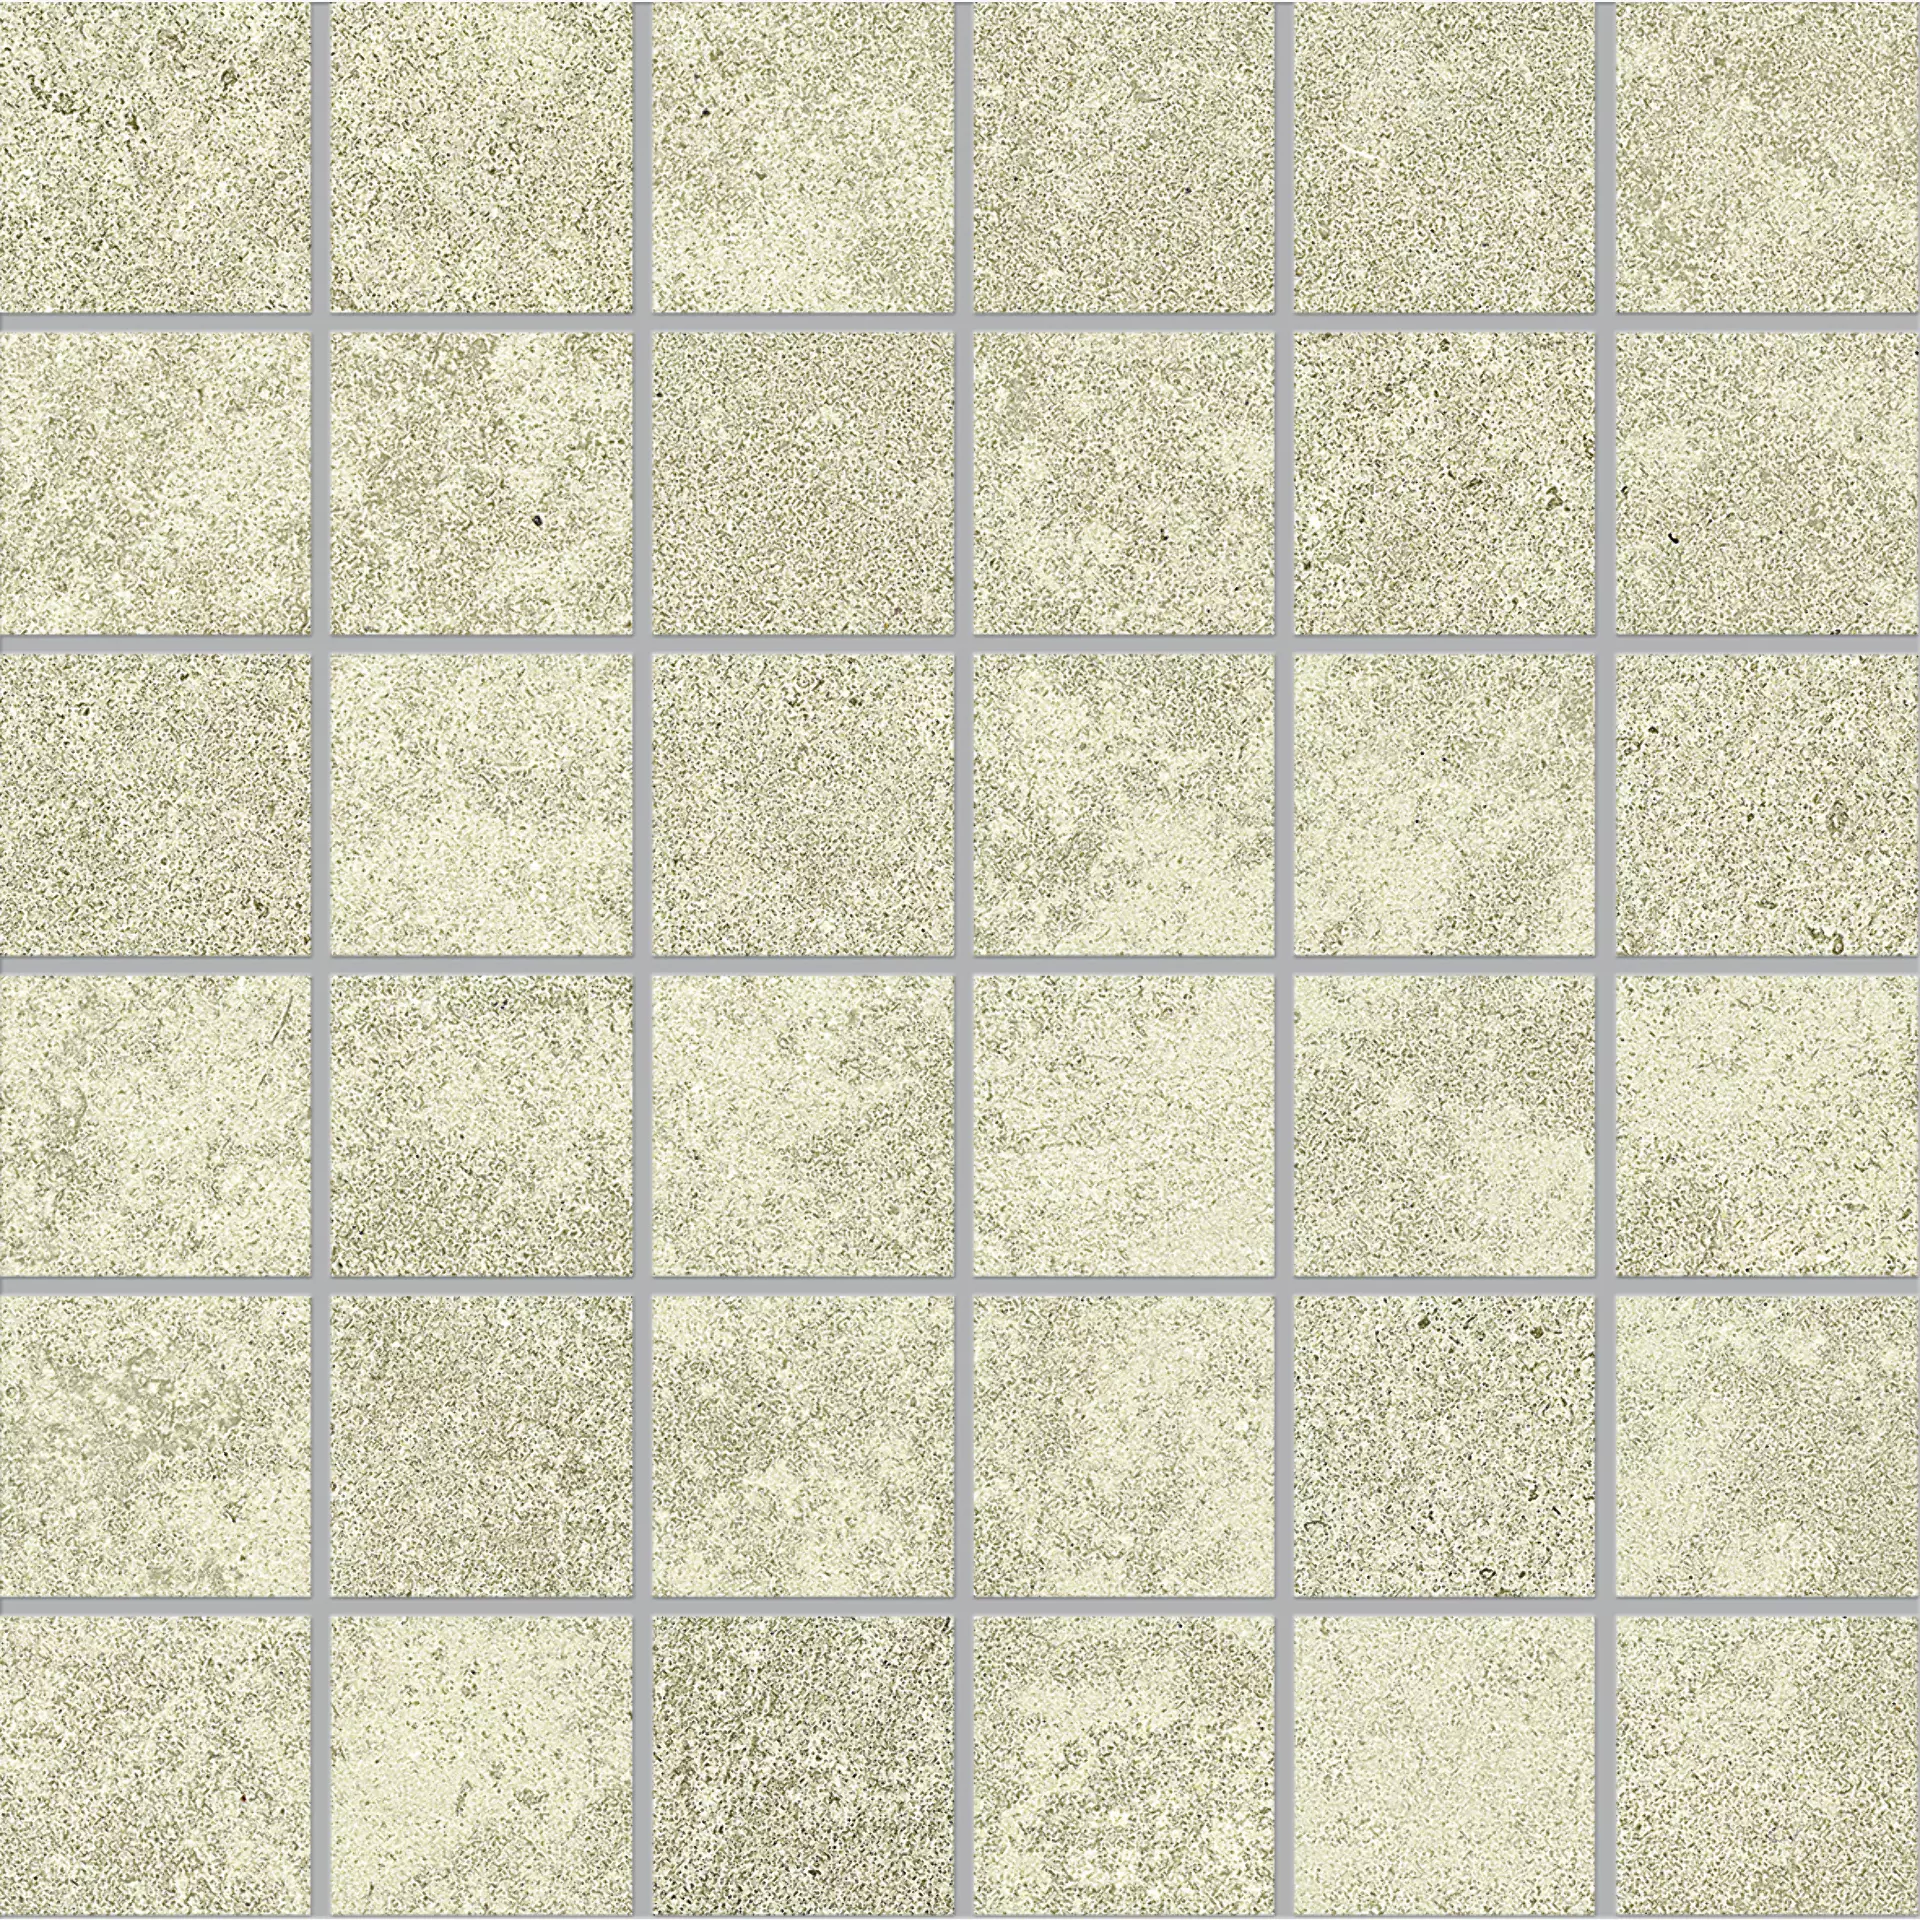 Provenza Re-Play Concrete Sand Naturale Mosaic 5x5 EKGA 30x30cm 9,5mm